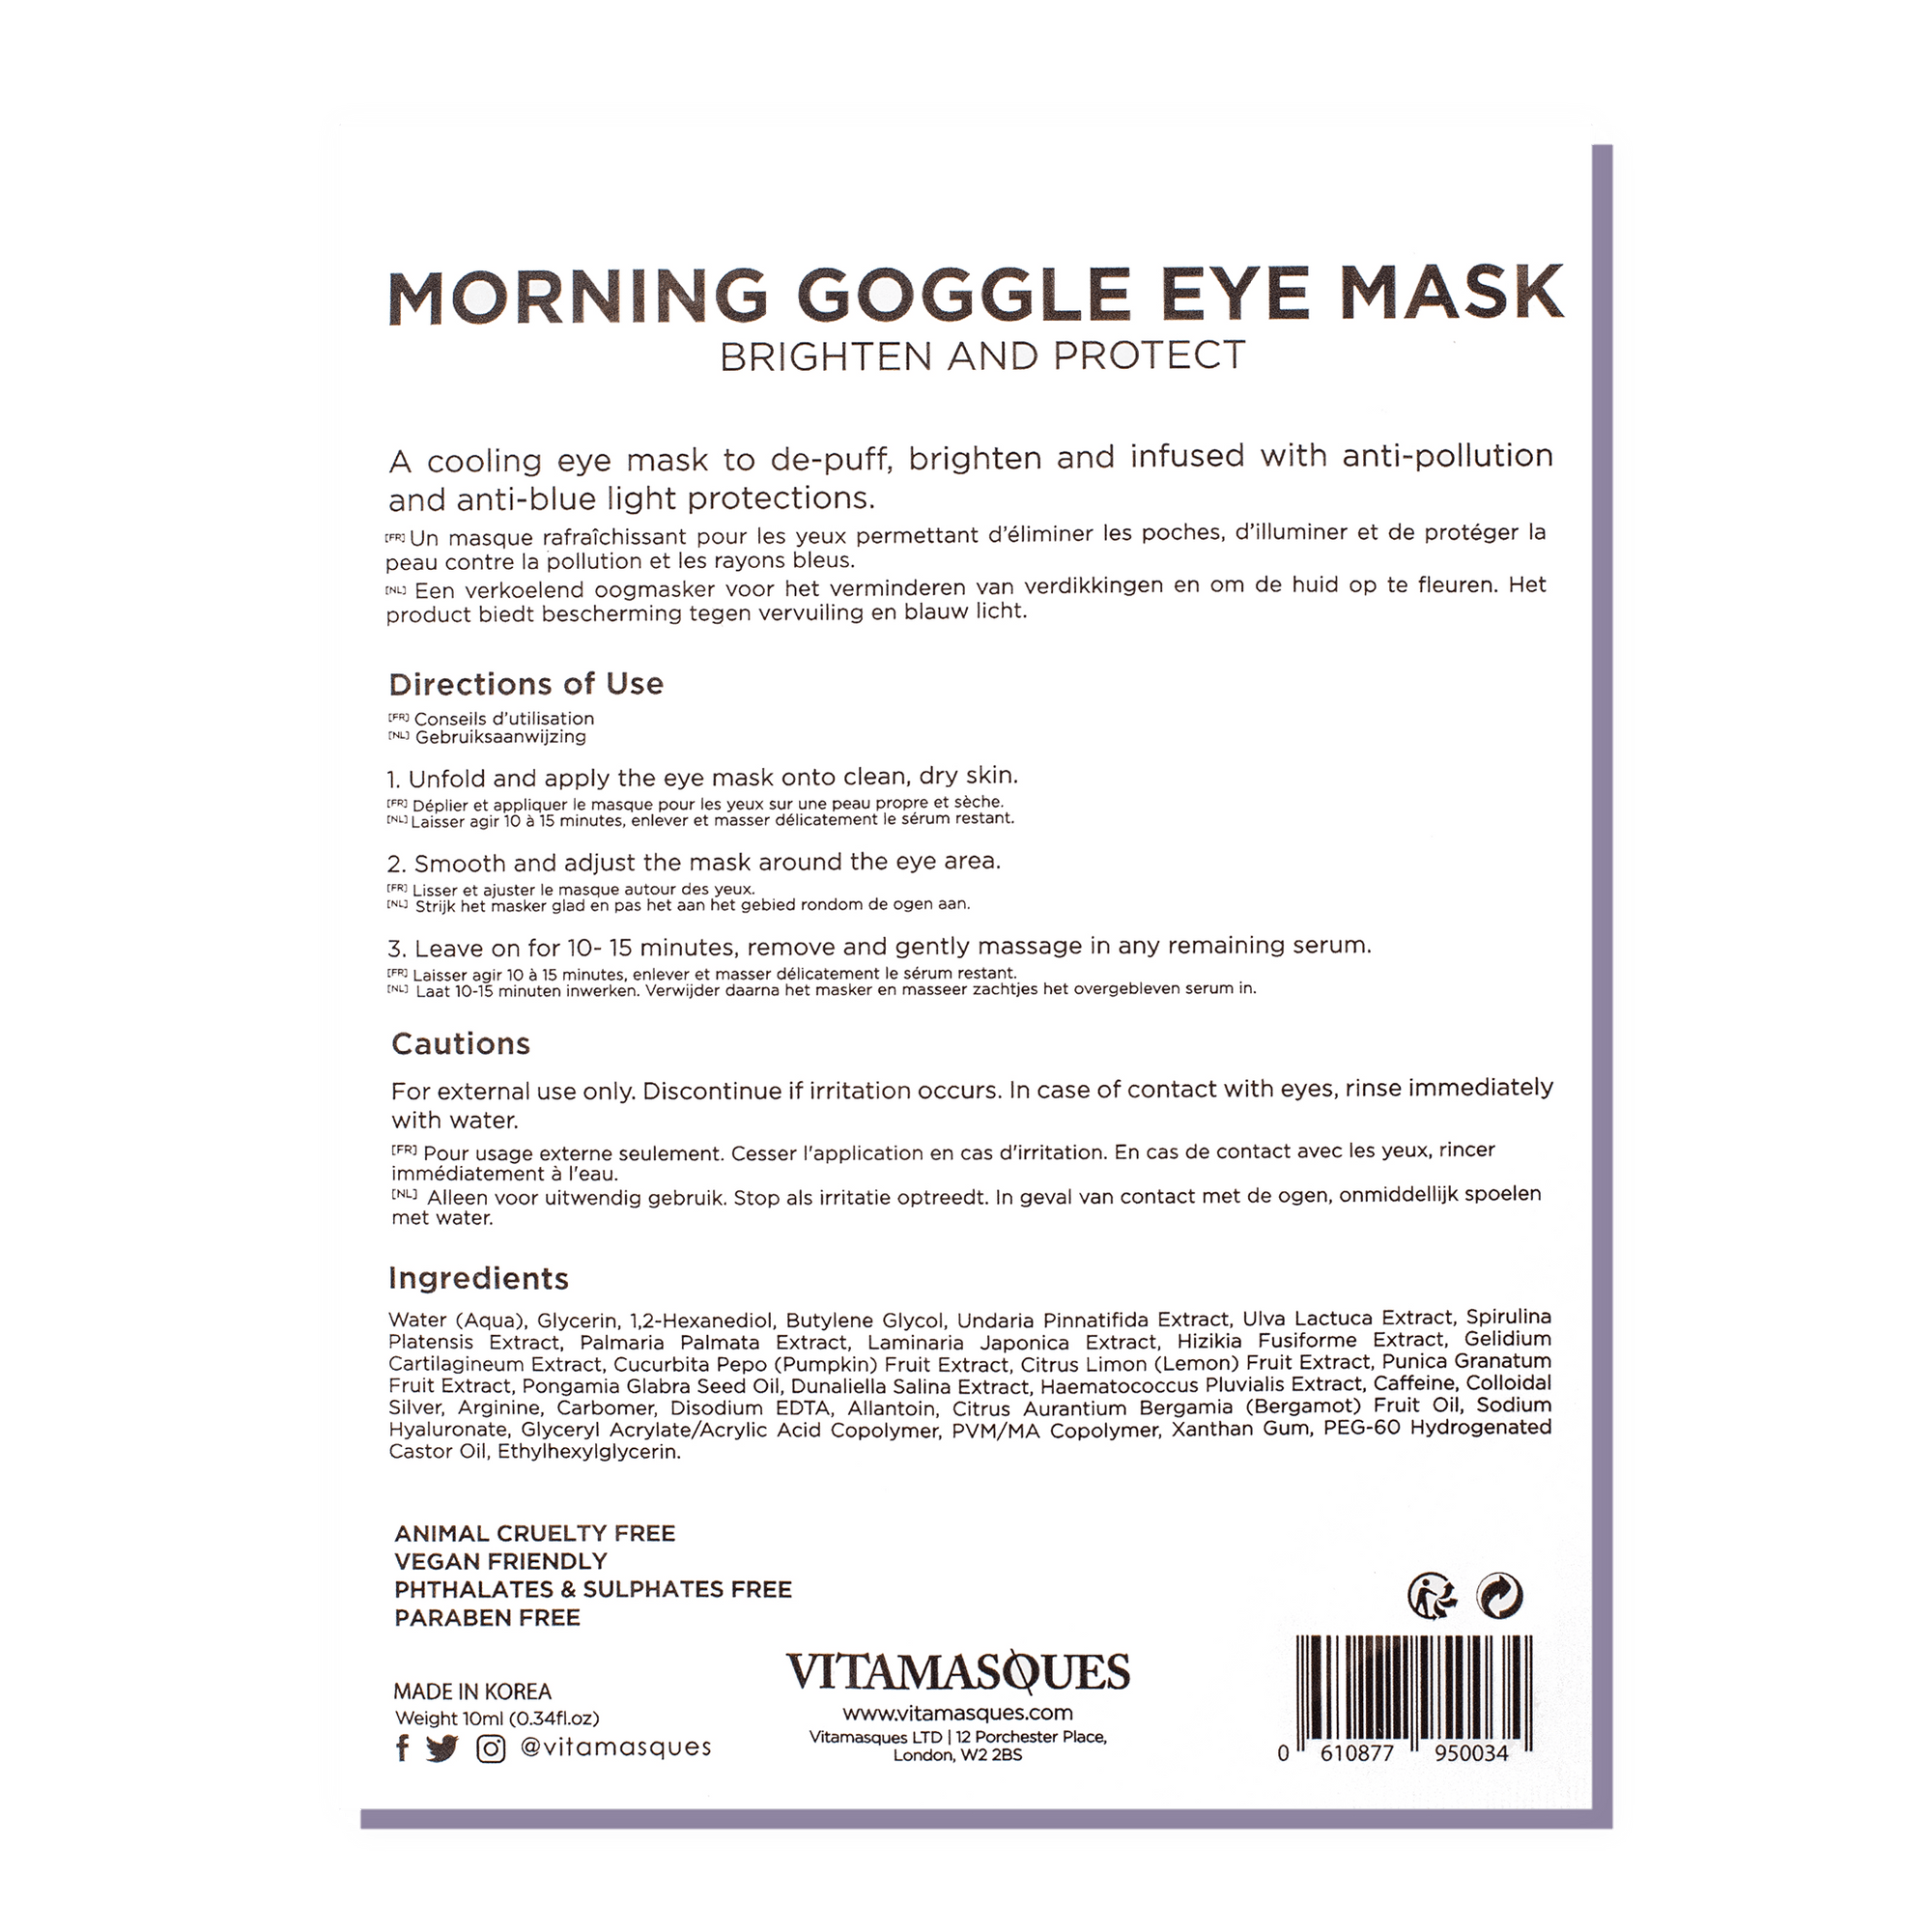 Morning Goggle Eye Mask - Vitamasques